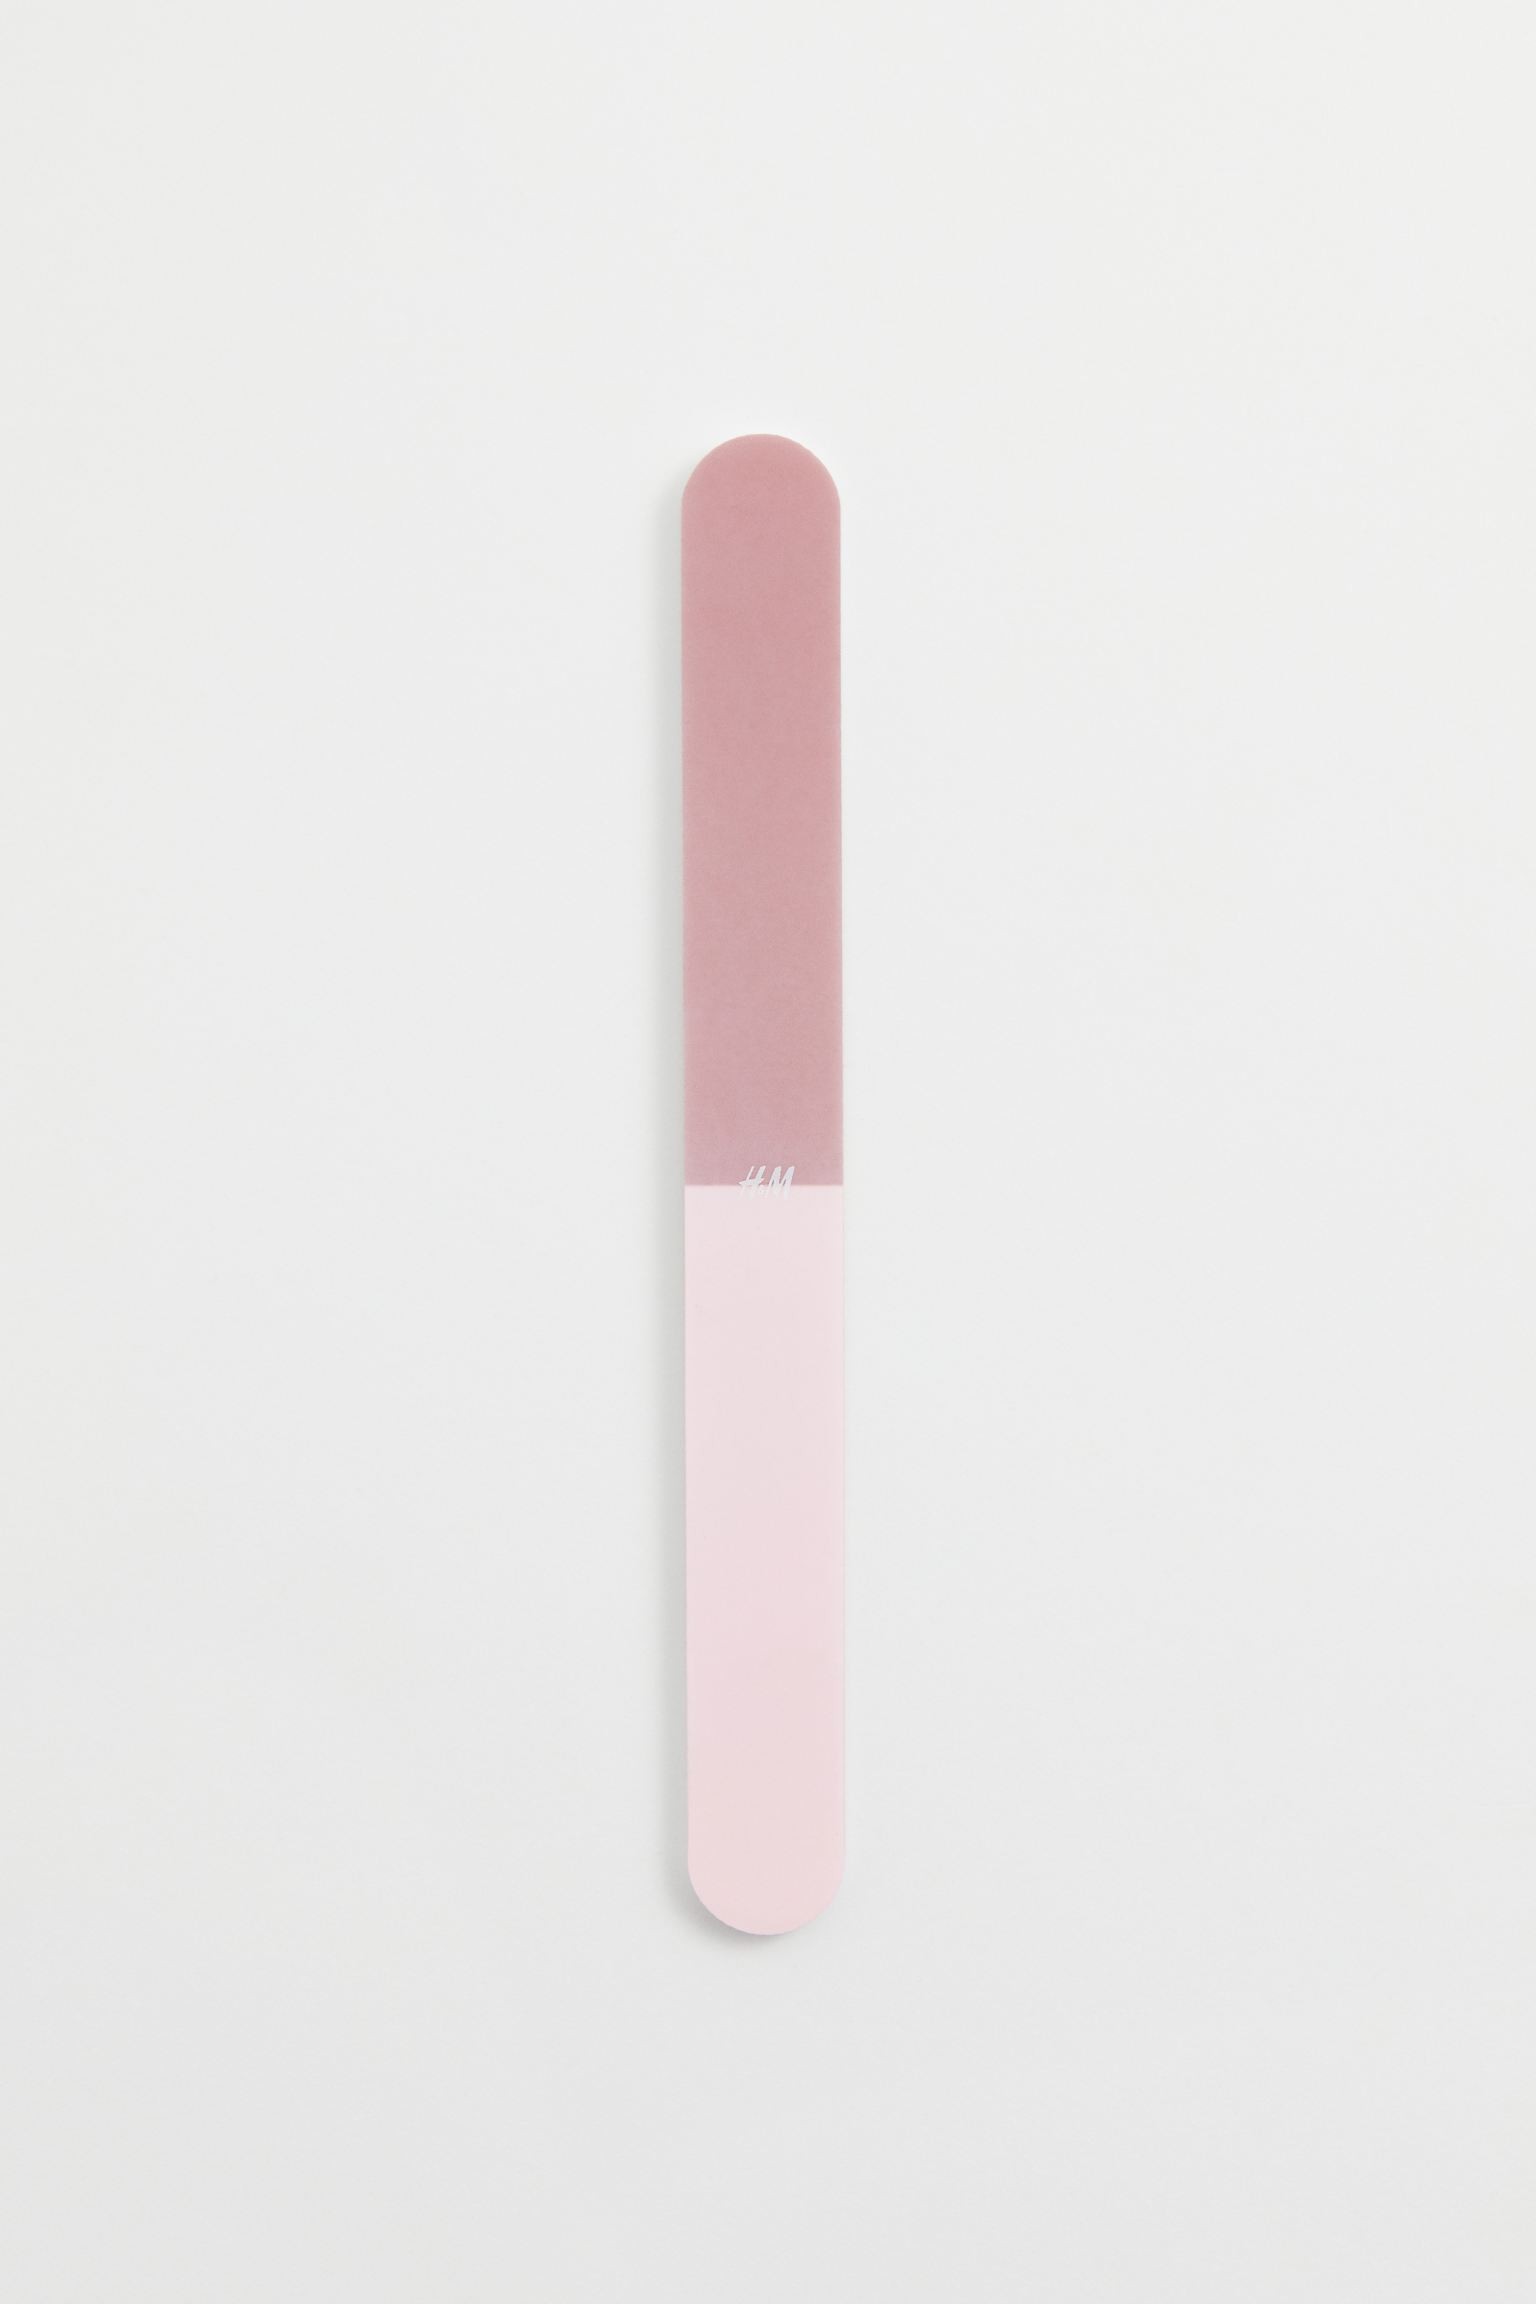 H&M Home Двусторонняя пилочка для ногтей, светло-розовый 1068643001 | 1068643001